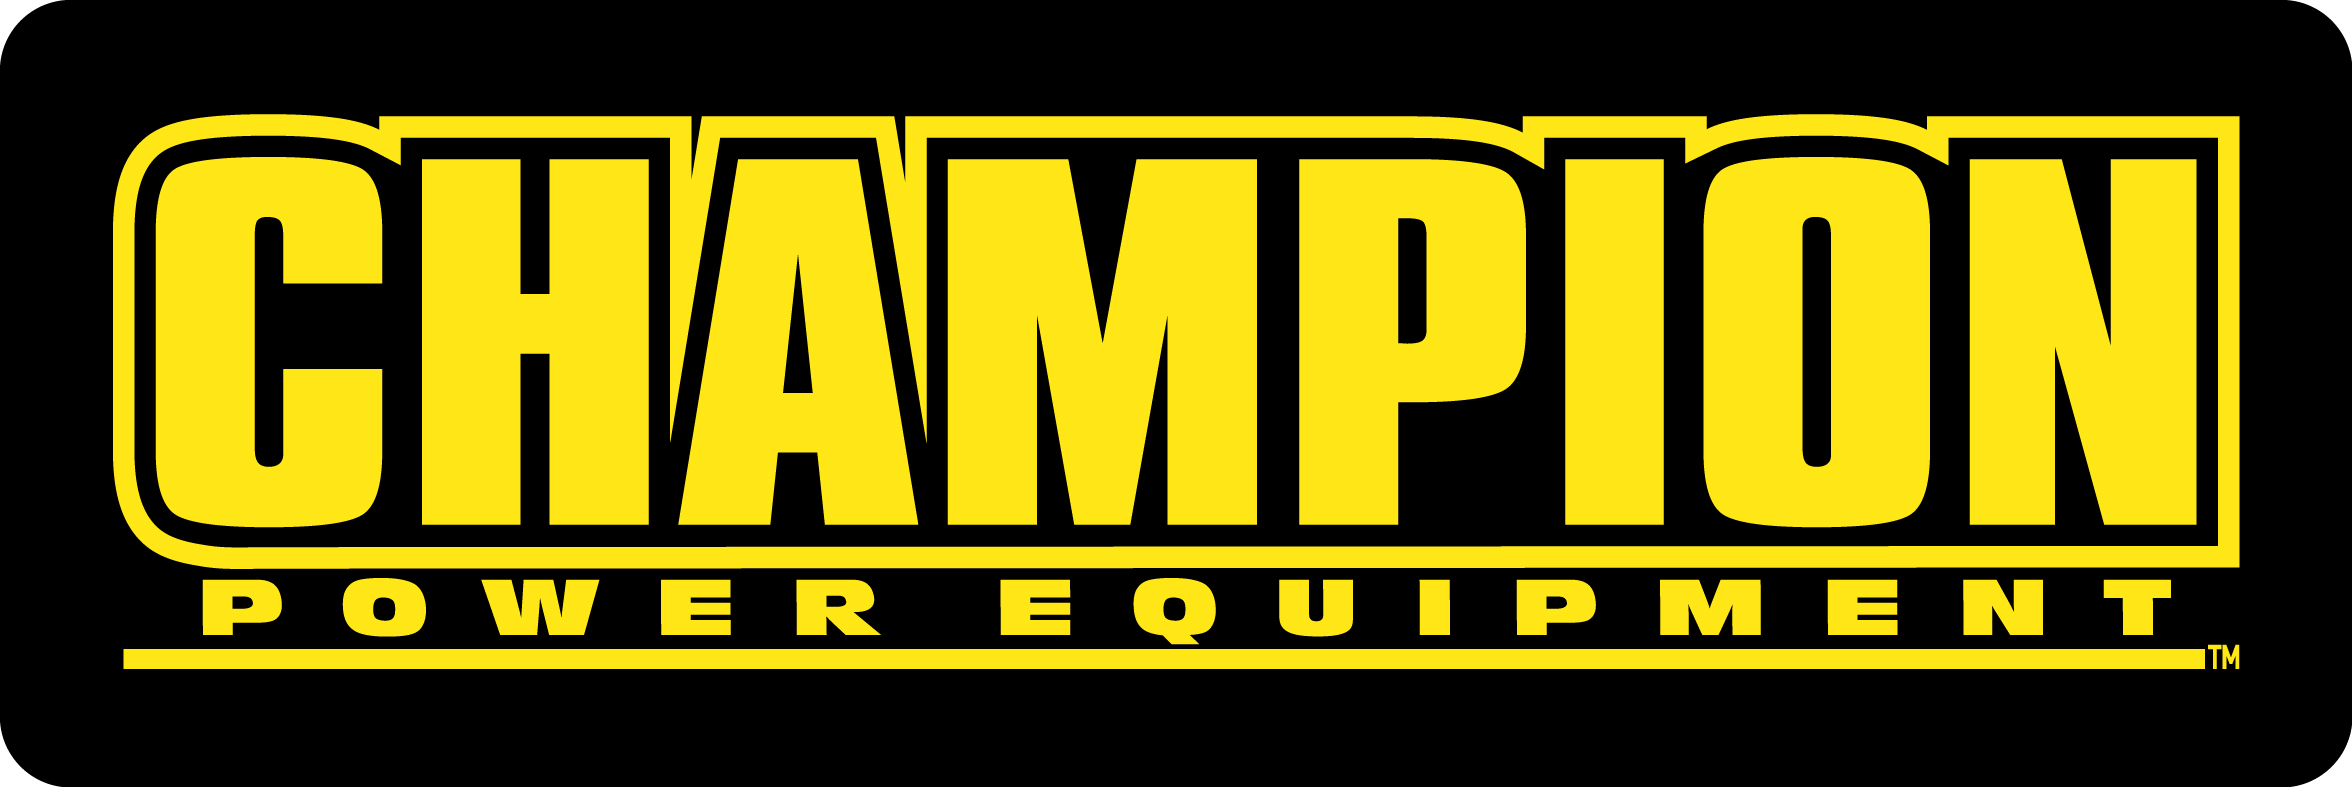 champion-logo-1-.jpg